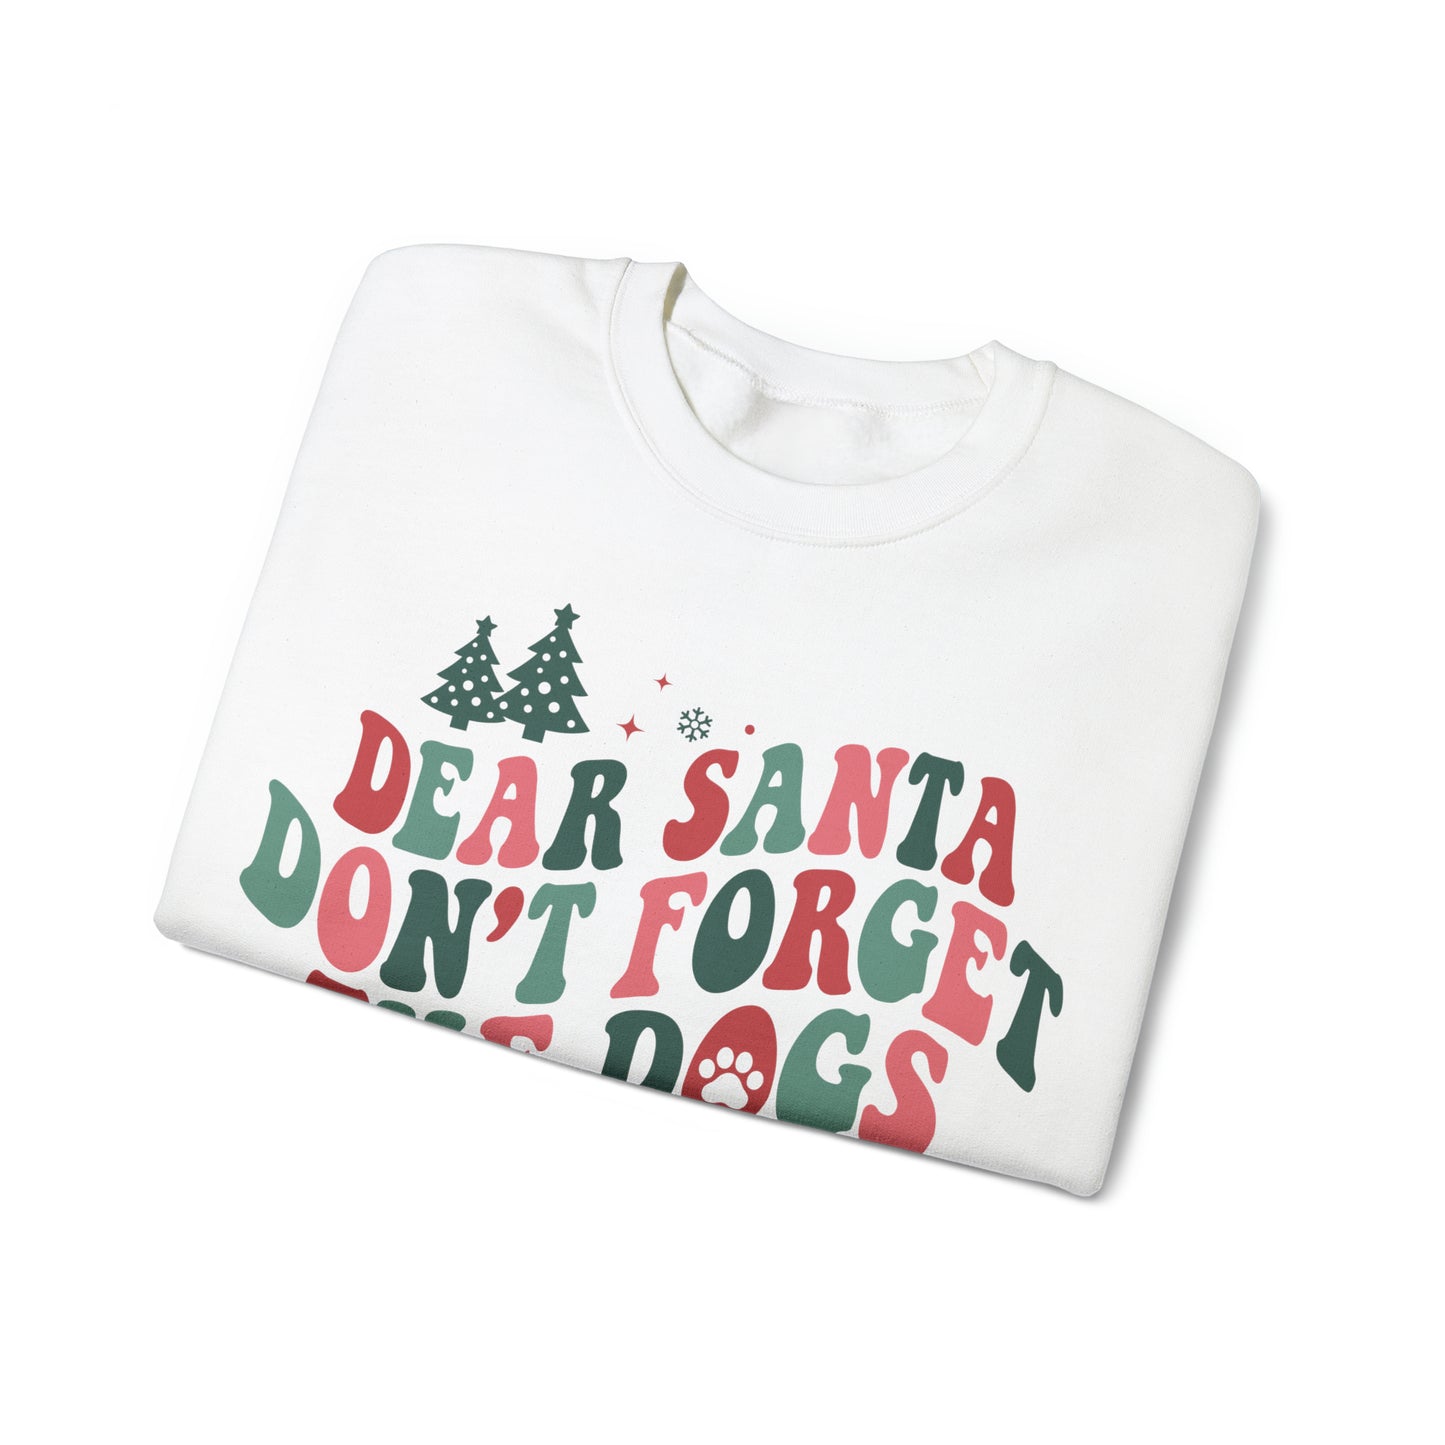 Santa Don't Forget the Dogs Crewneck Sweatshirt